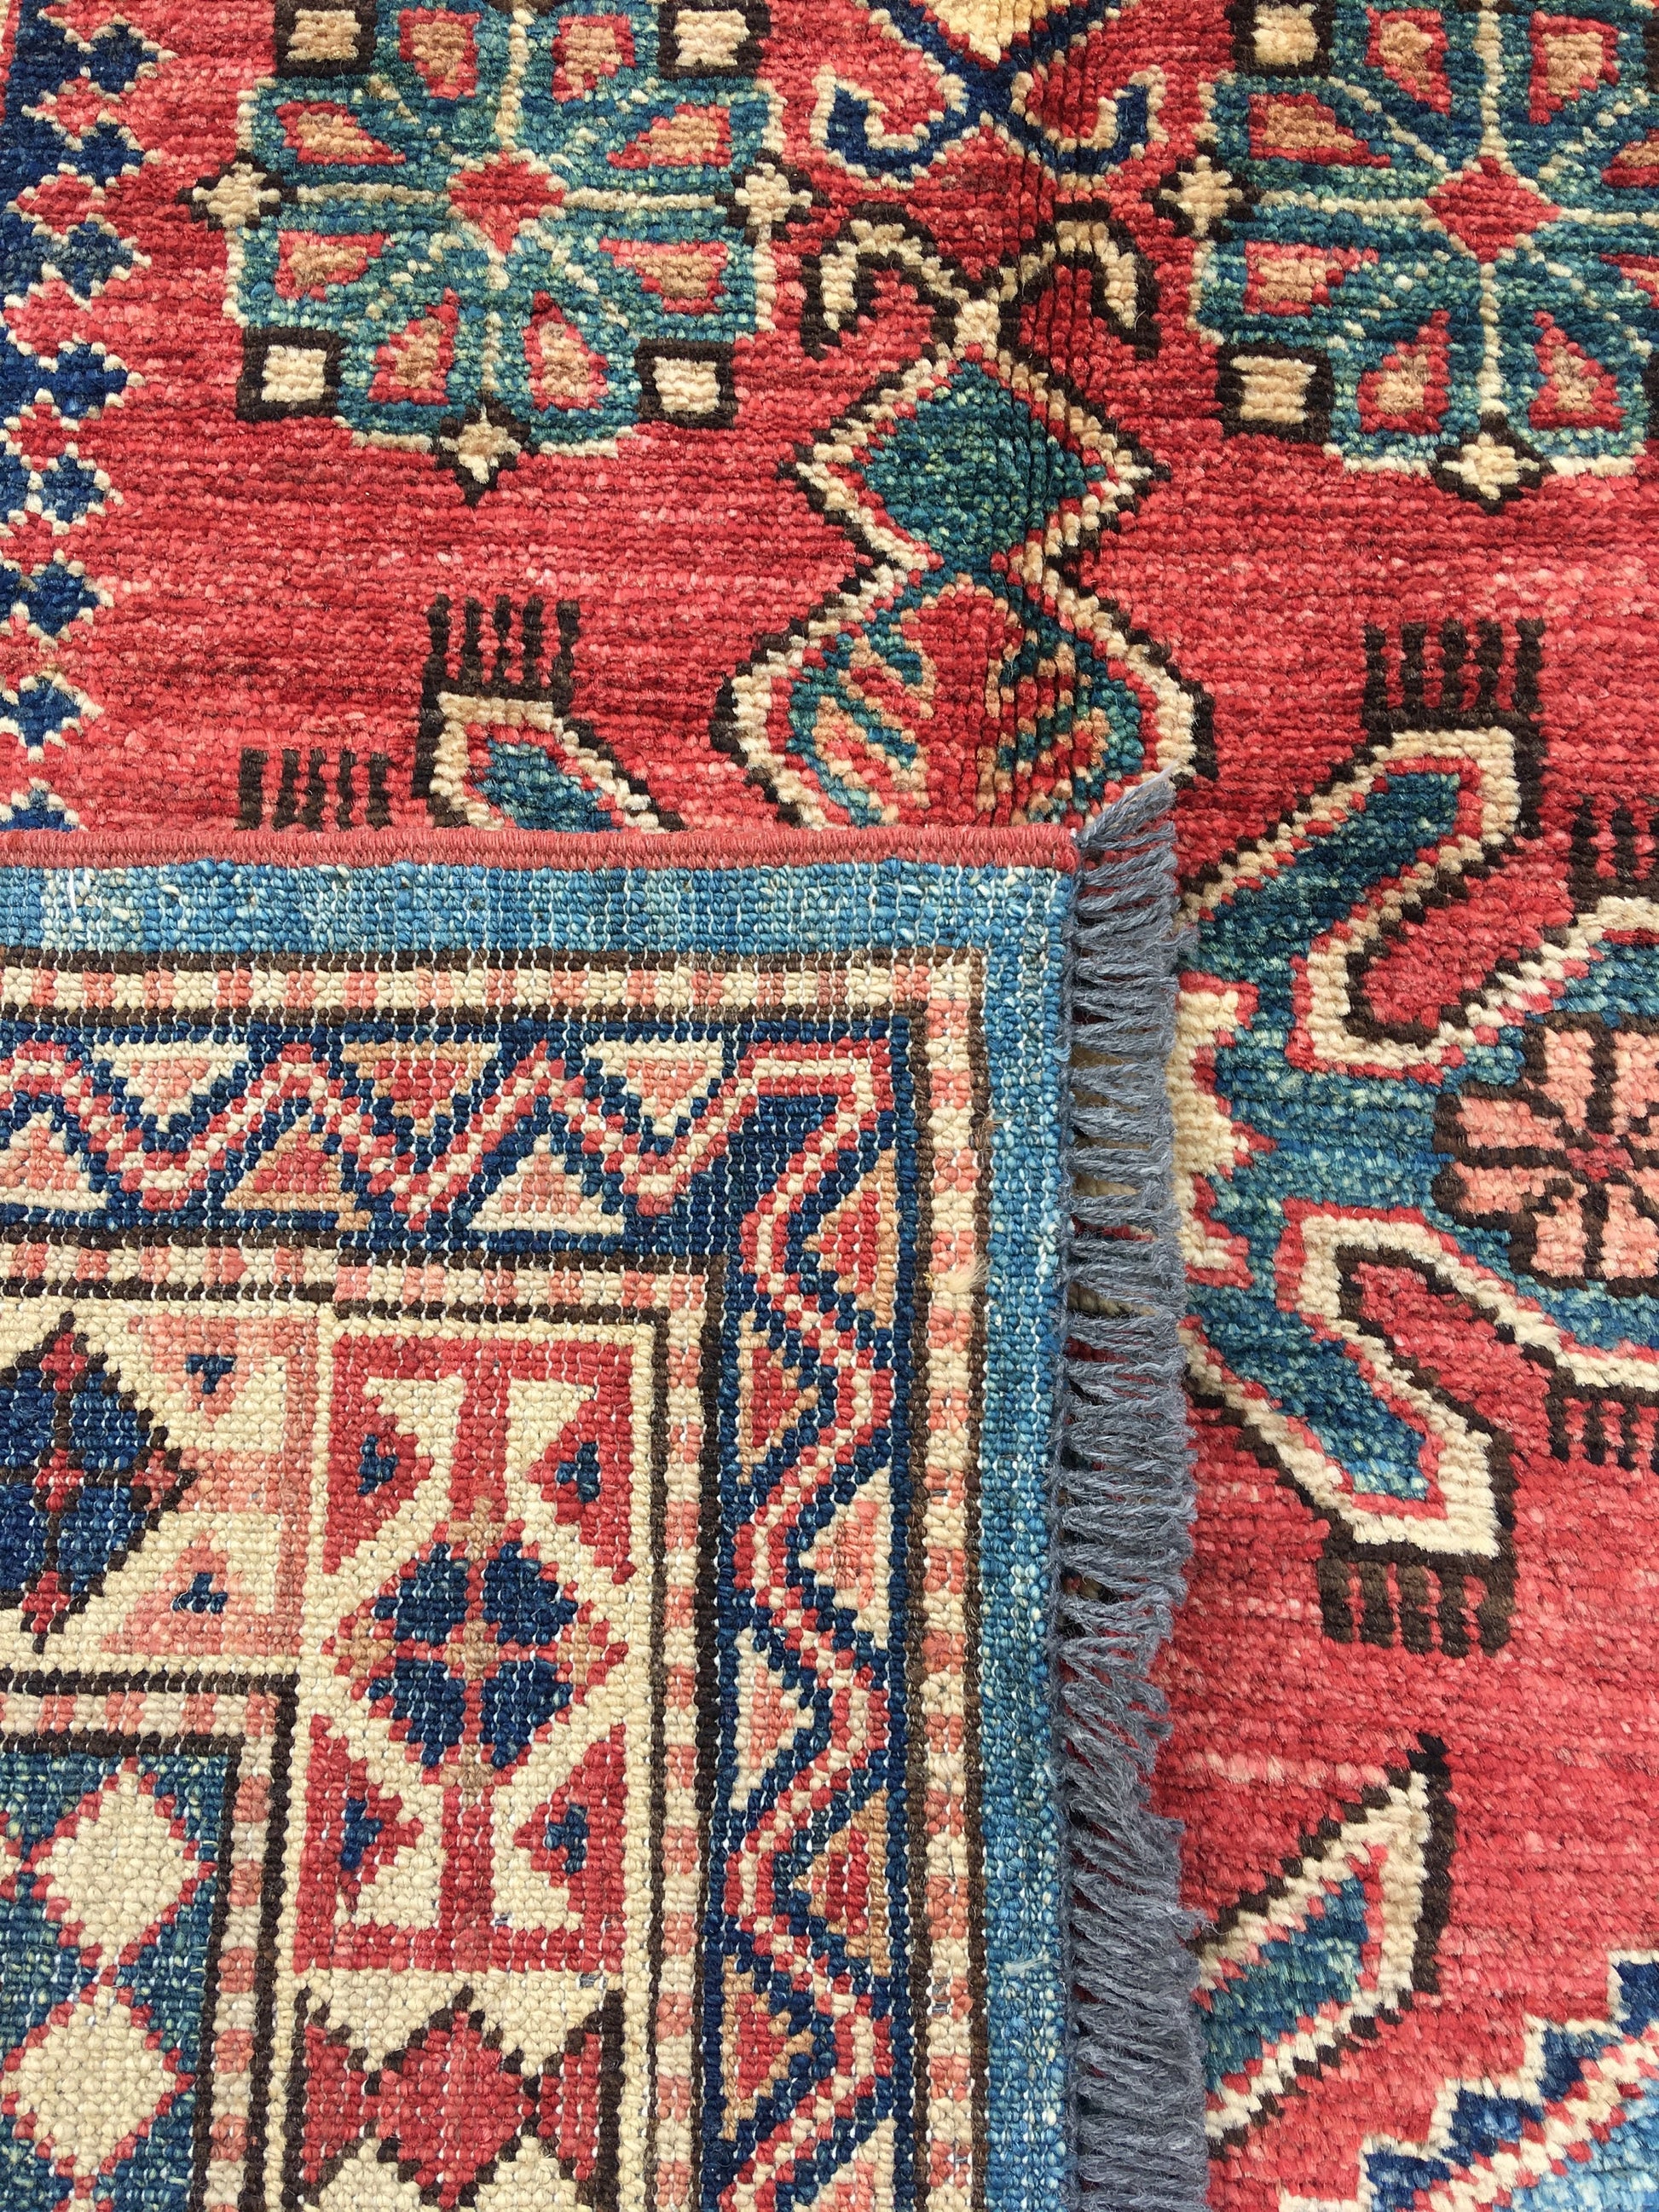 Handmade 3x5 feet Tribal Blue Beige Runner Rug Wool with Red Central Medallion